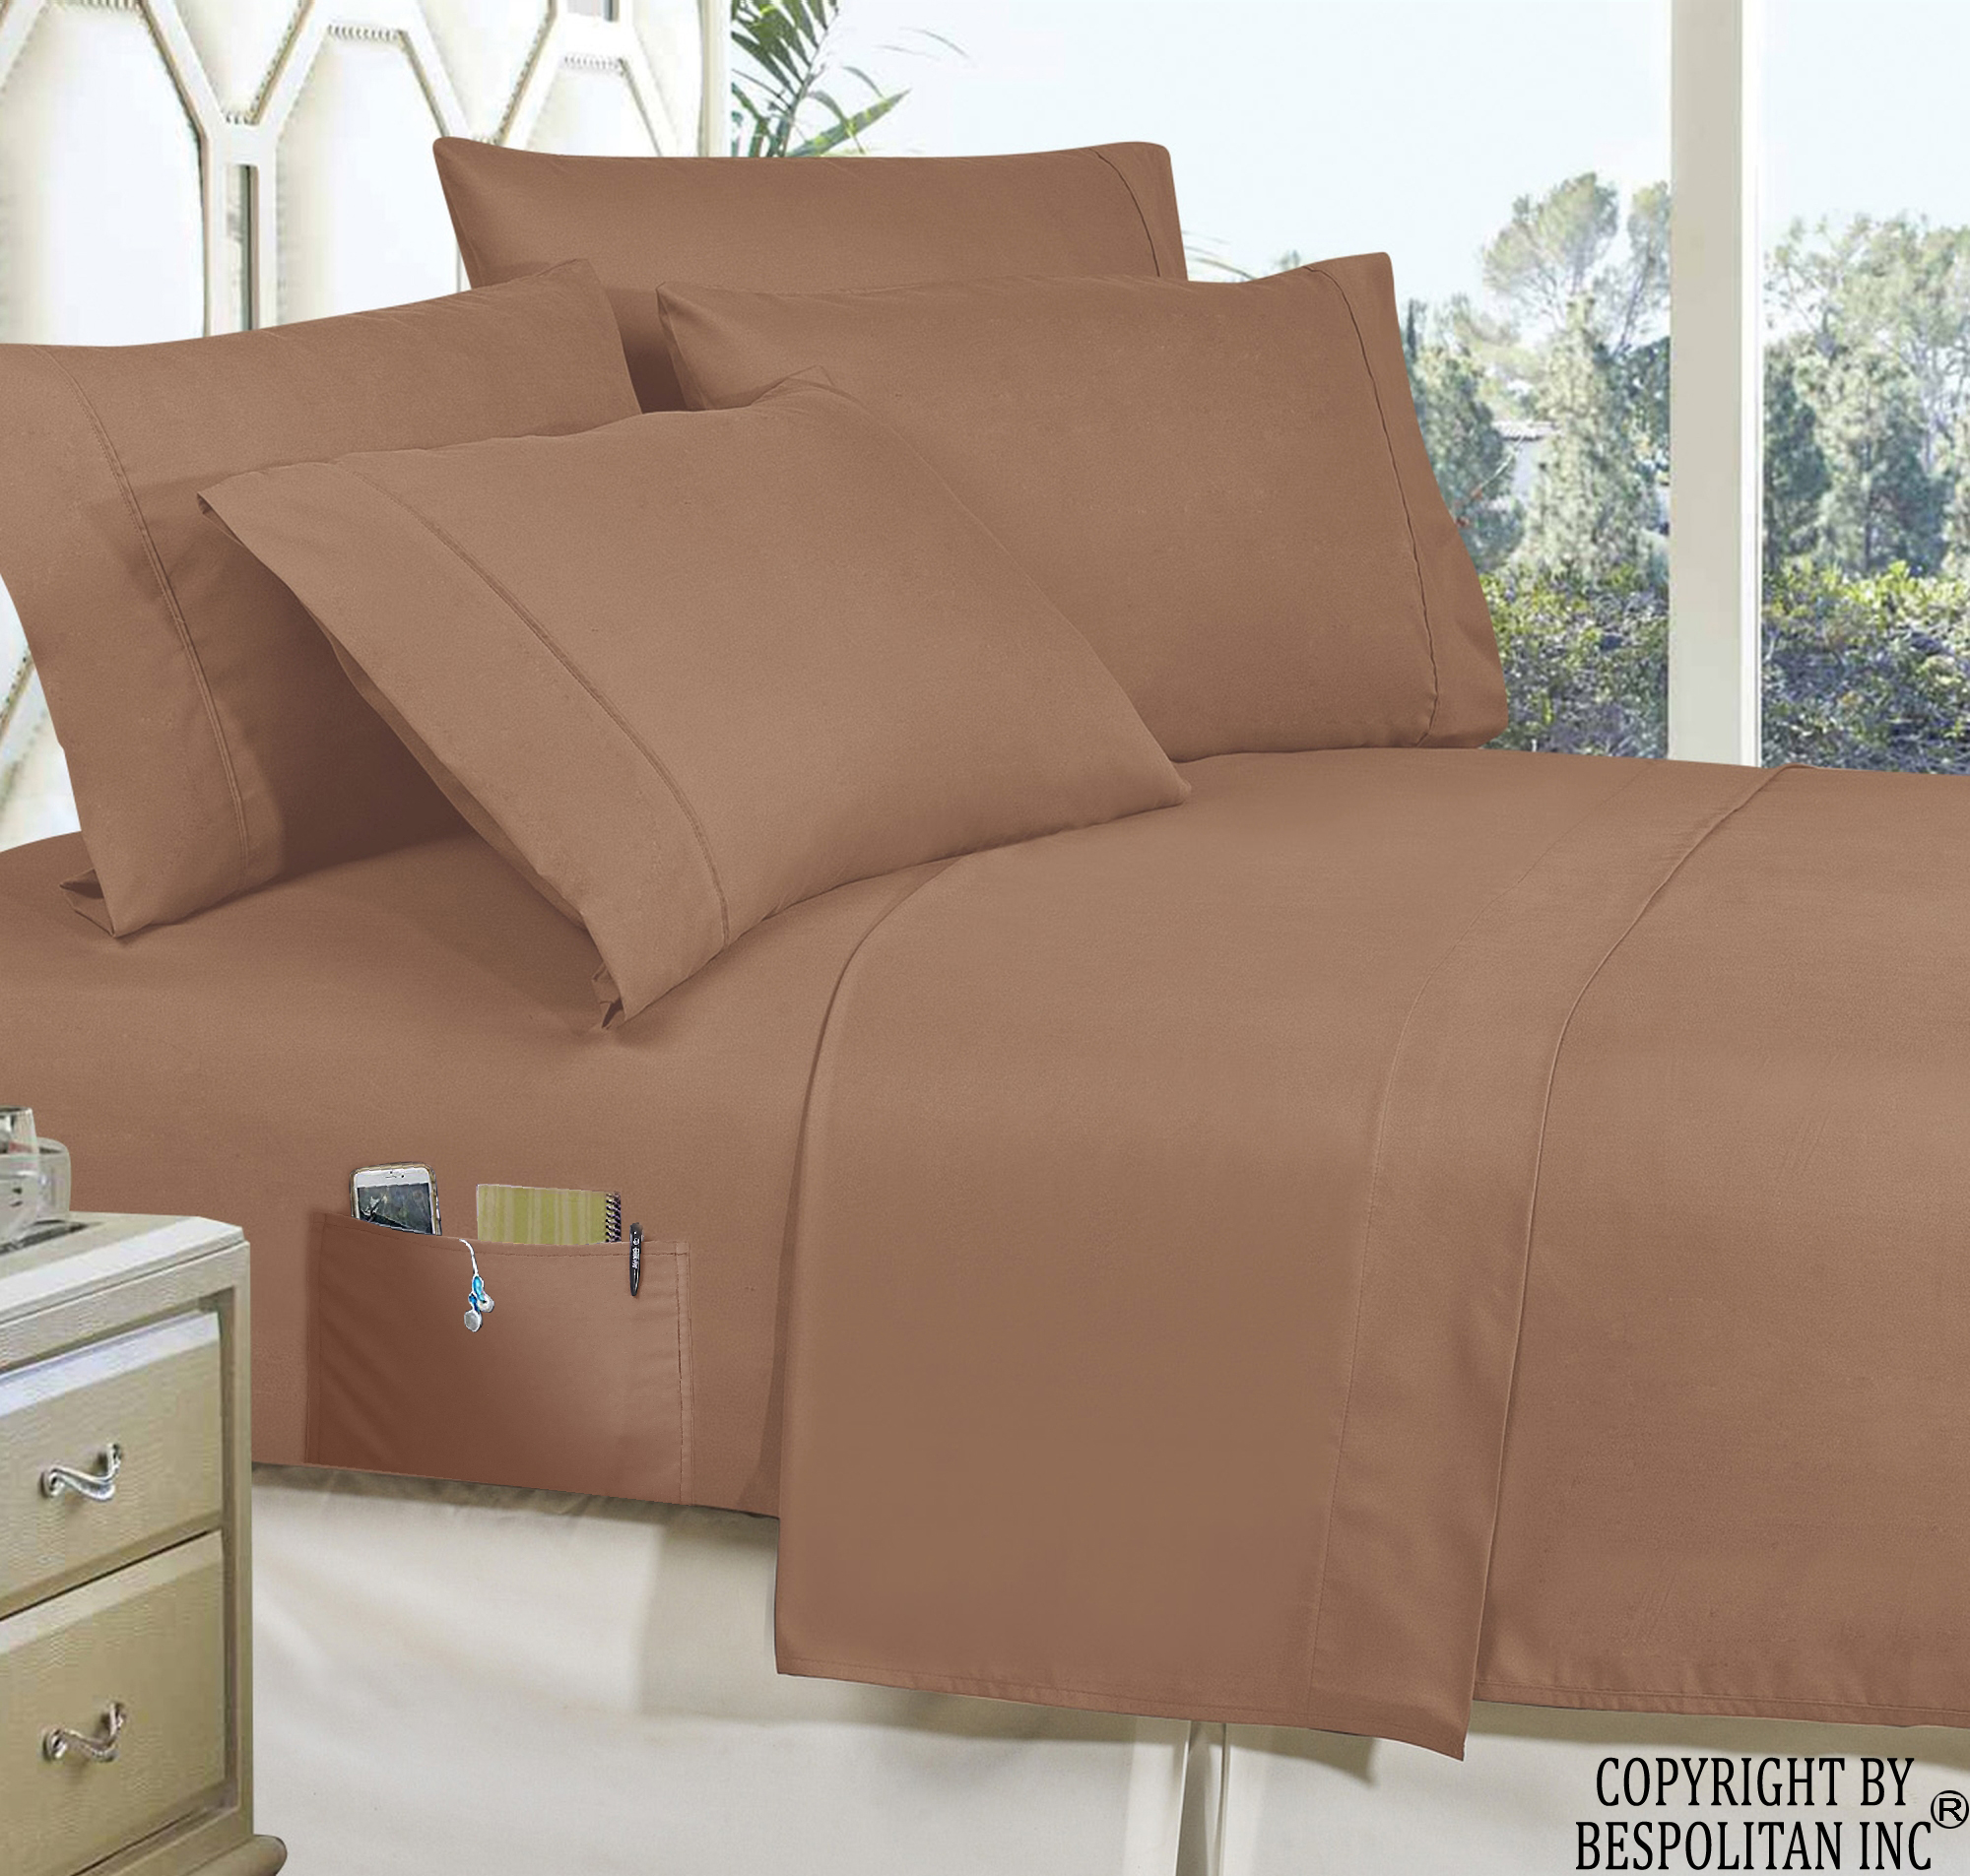 Elegant Comfort Wrinkle-Resistant 4-Piece Bed Sheet Set with Double Sided Storage Pockets, Deep Pocket